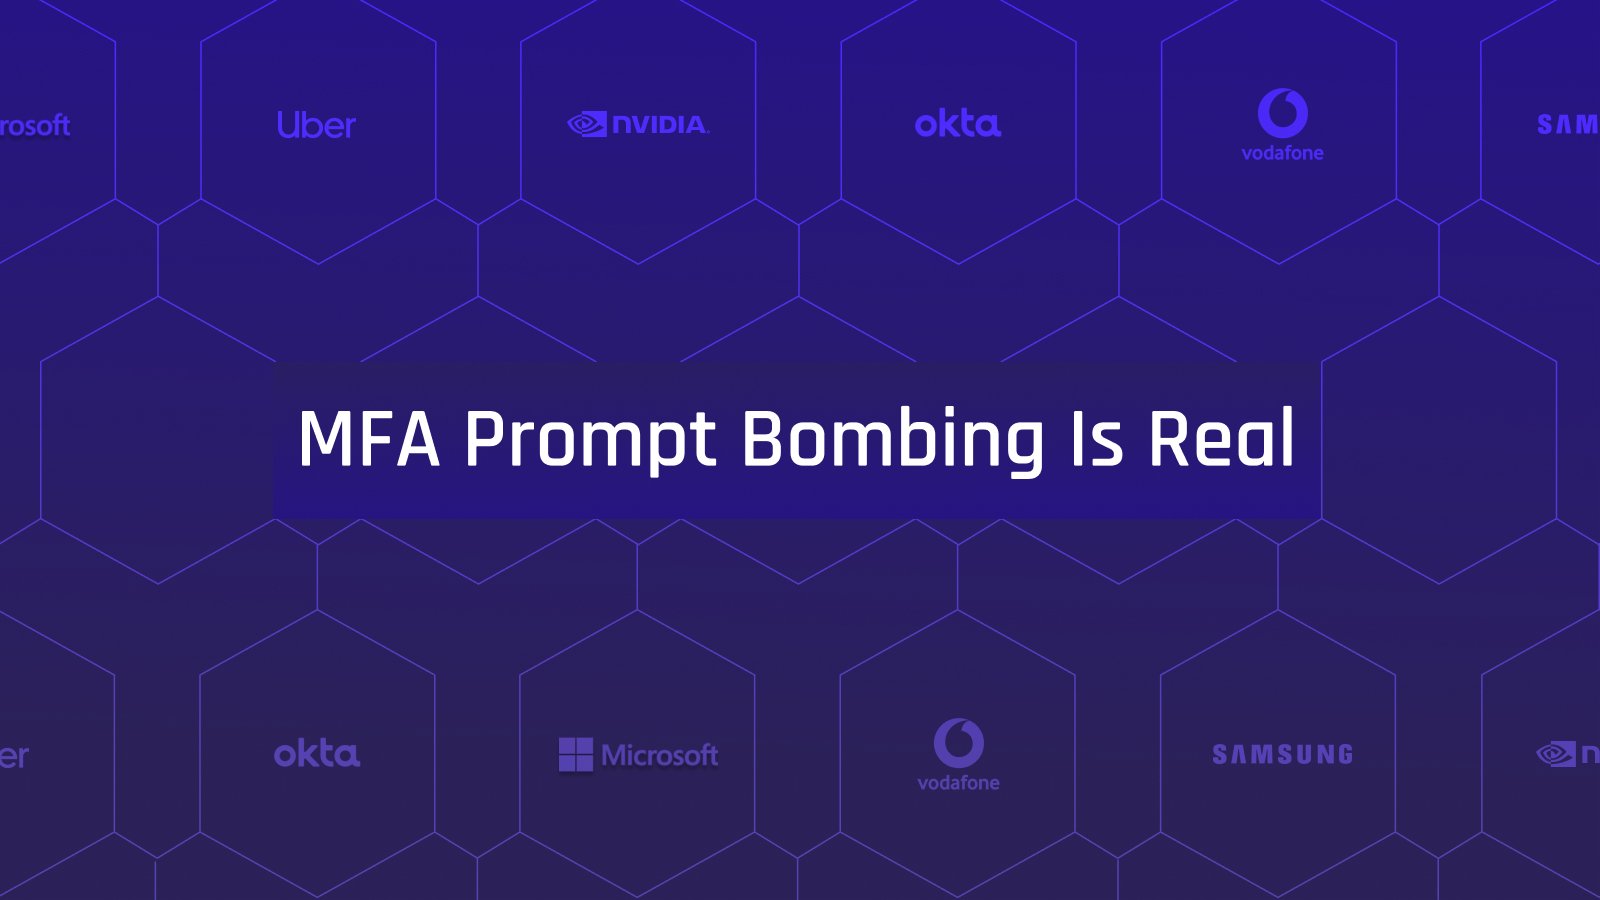 MFA Fatigue and MFA Prompt Bombing